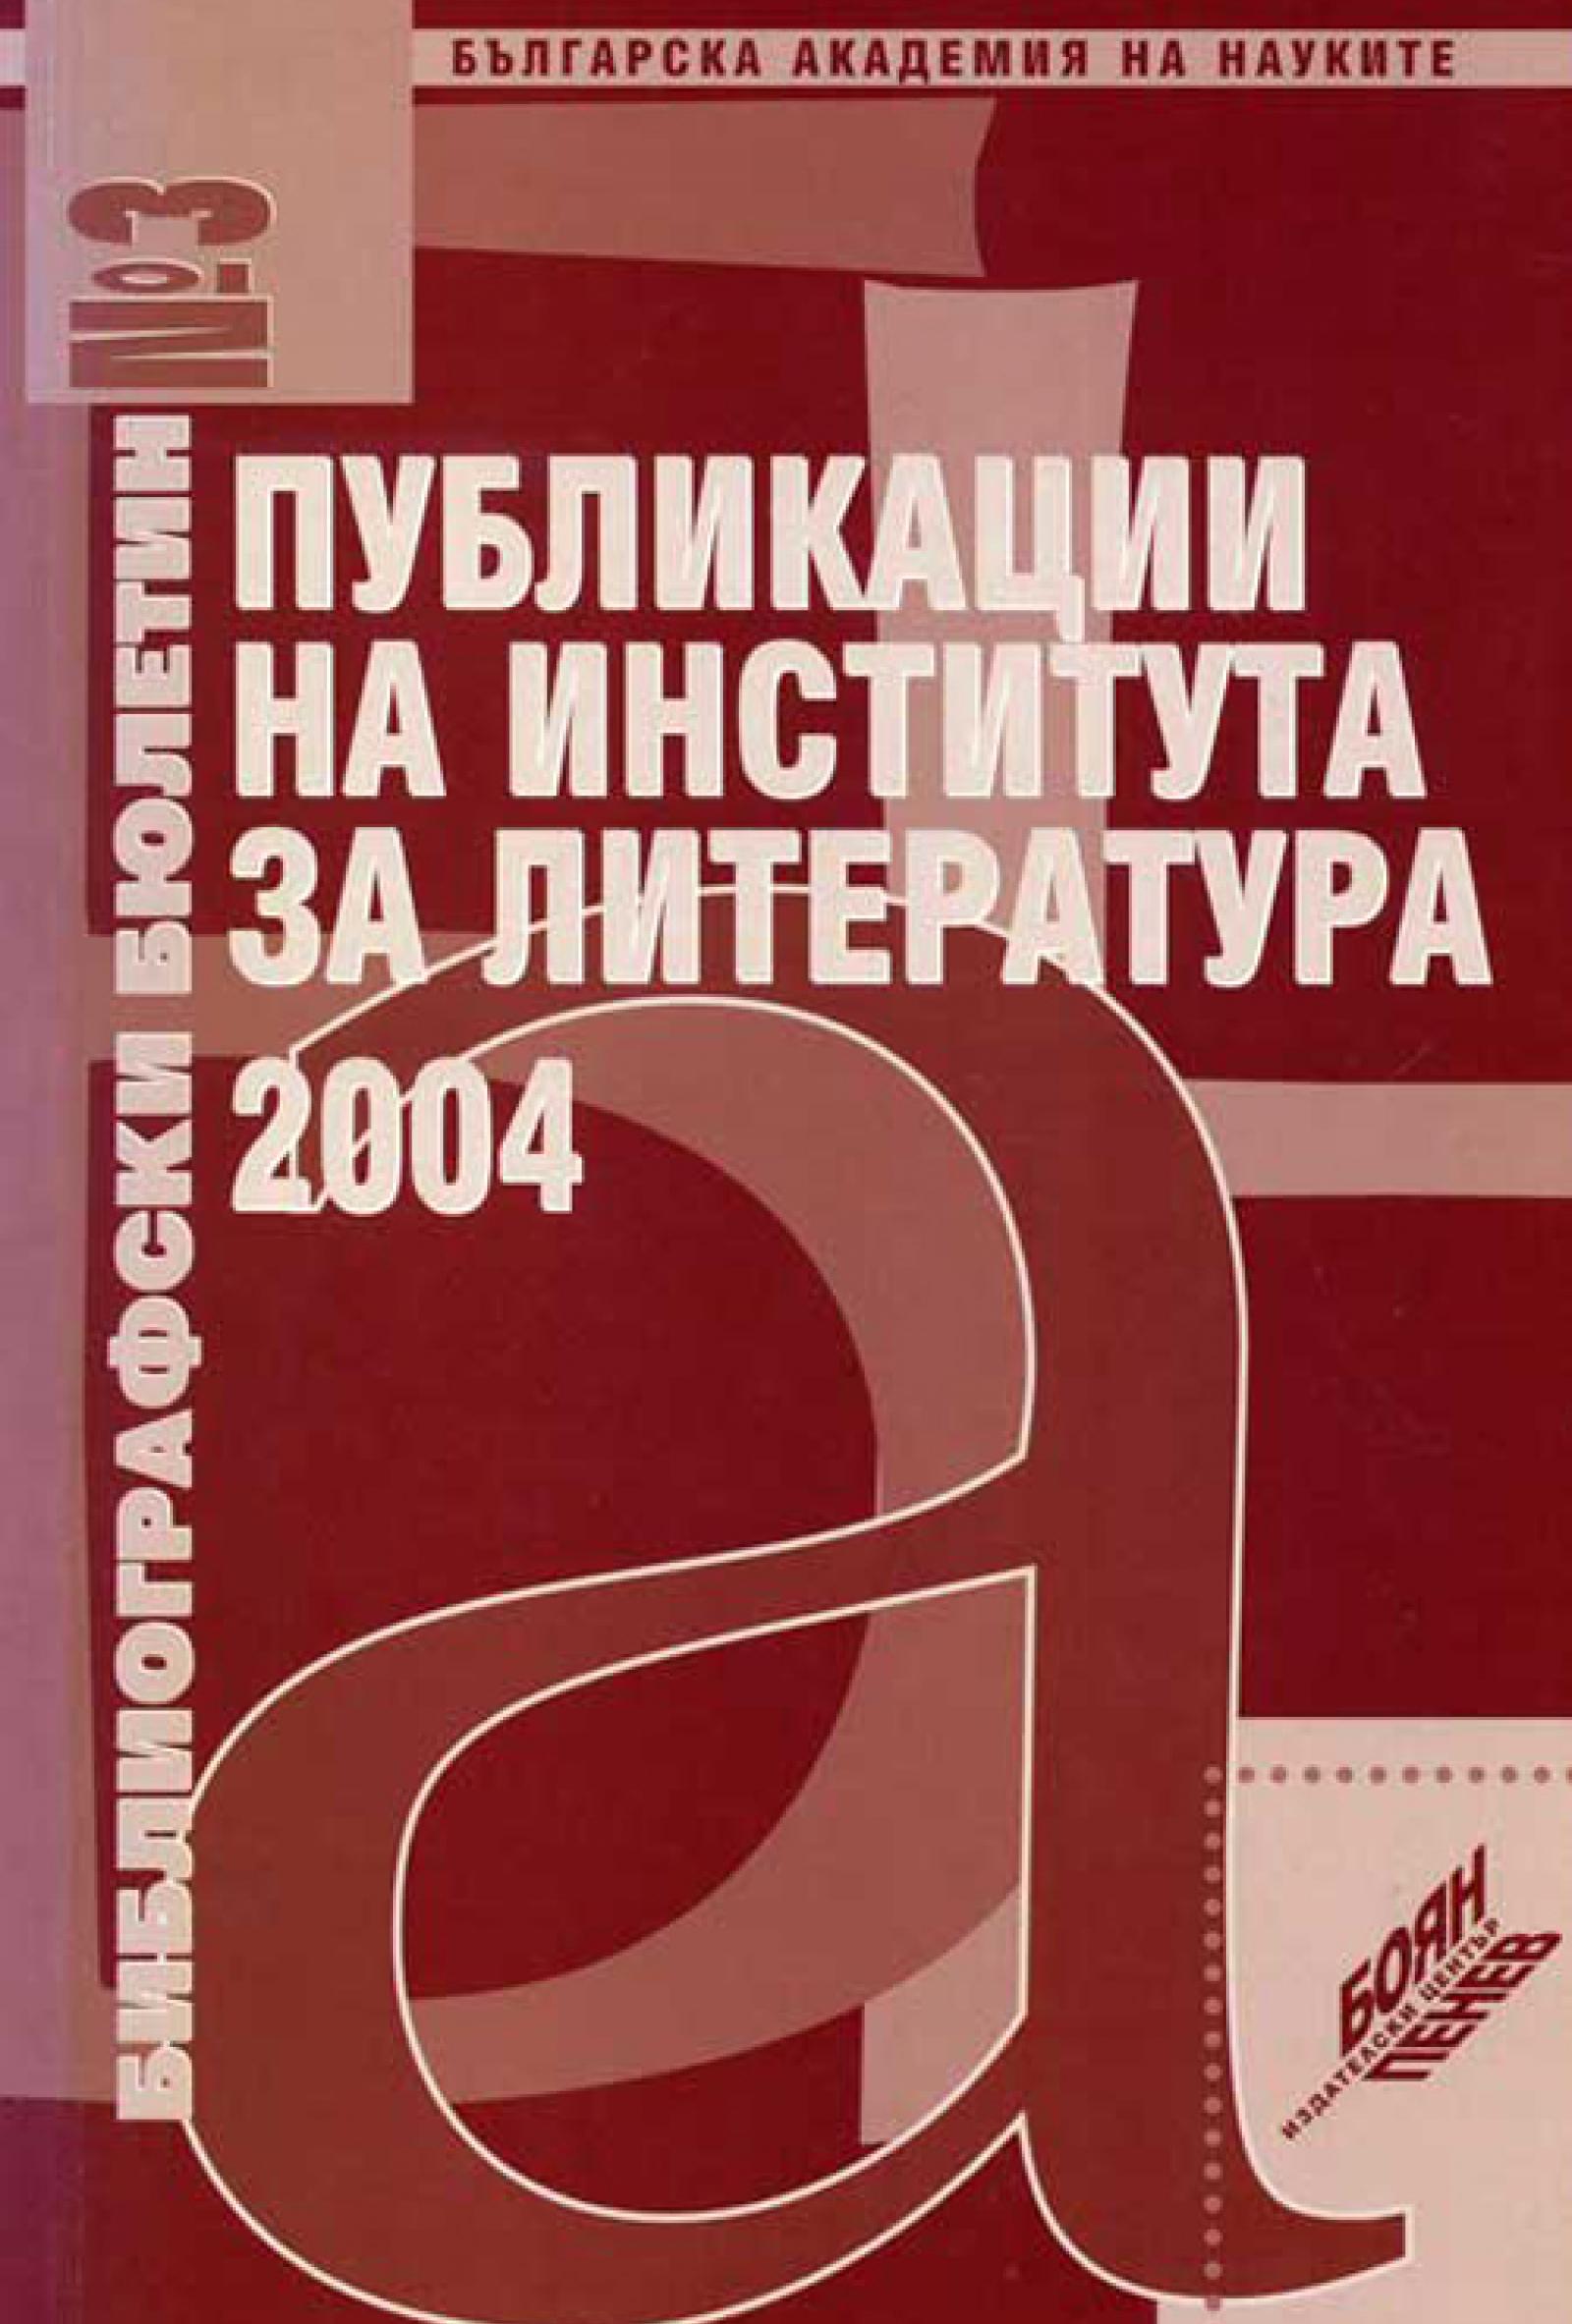 Publications_2004.jpg